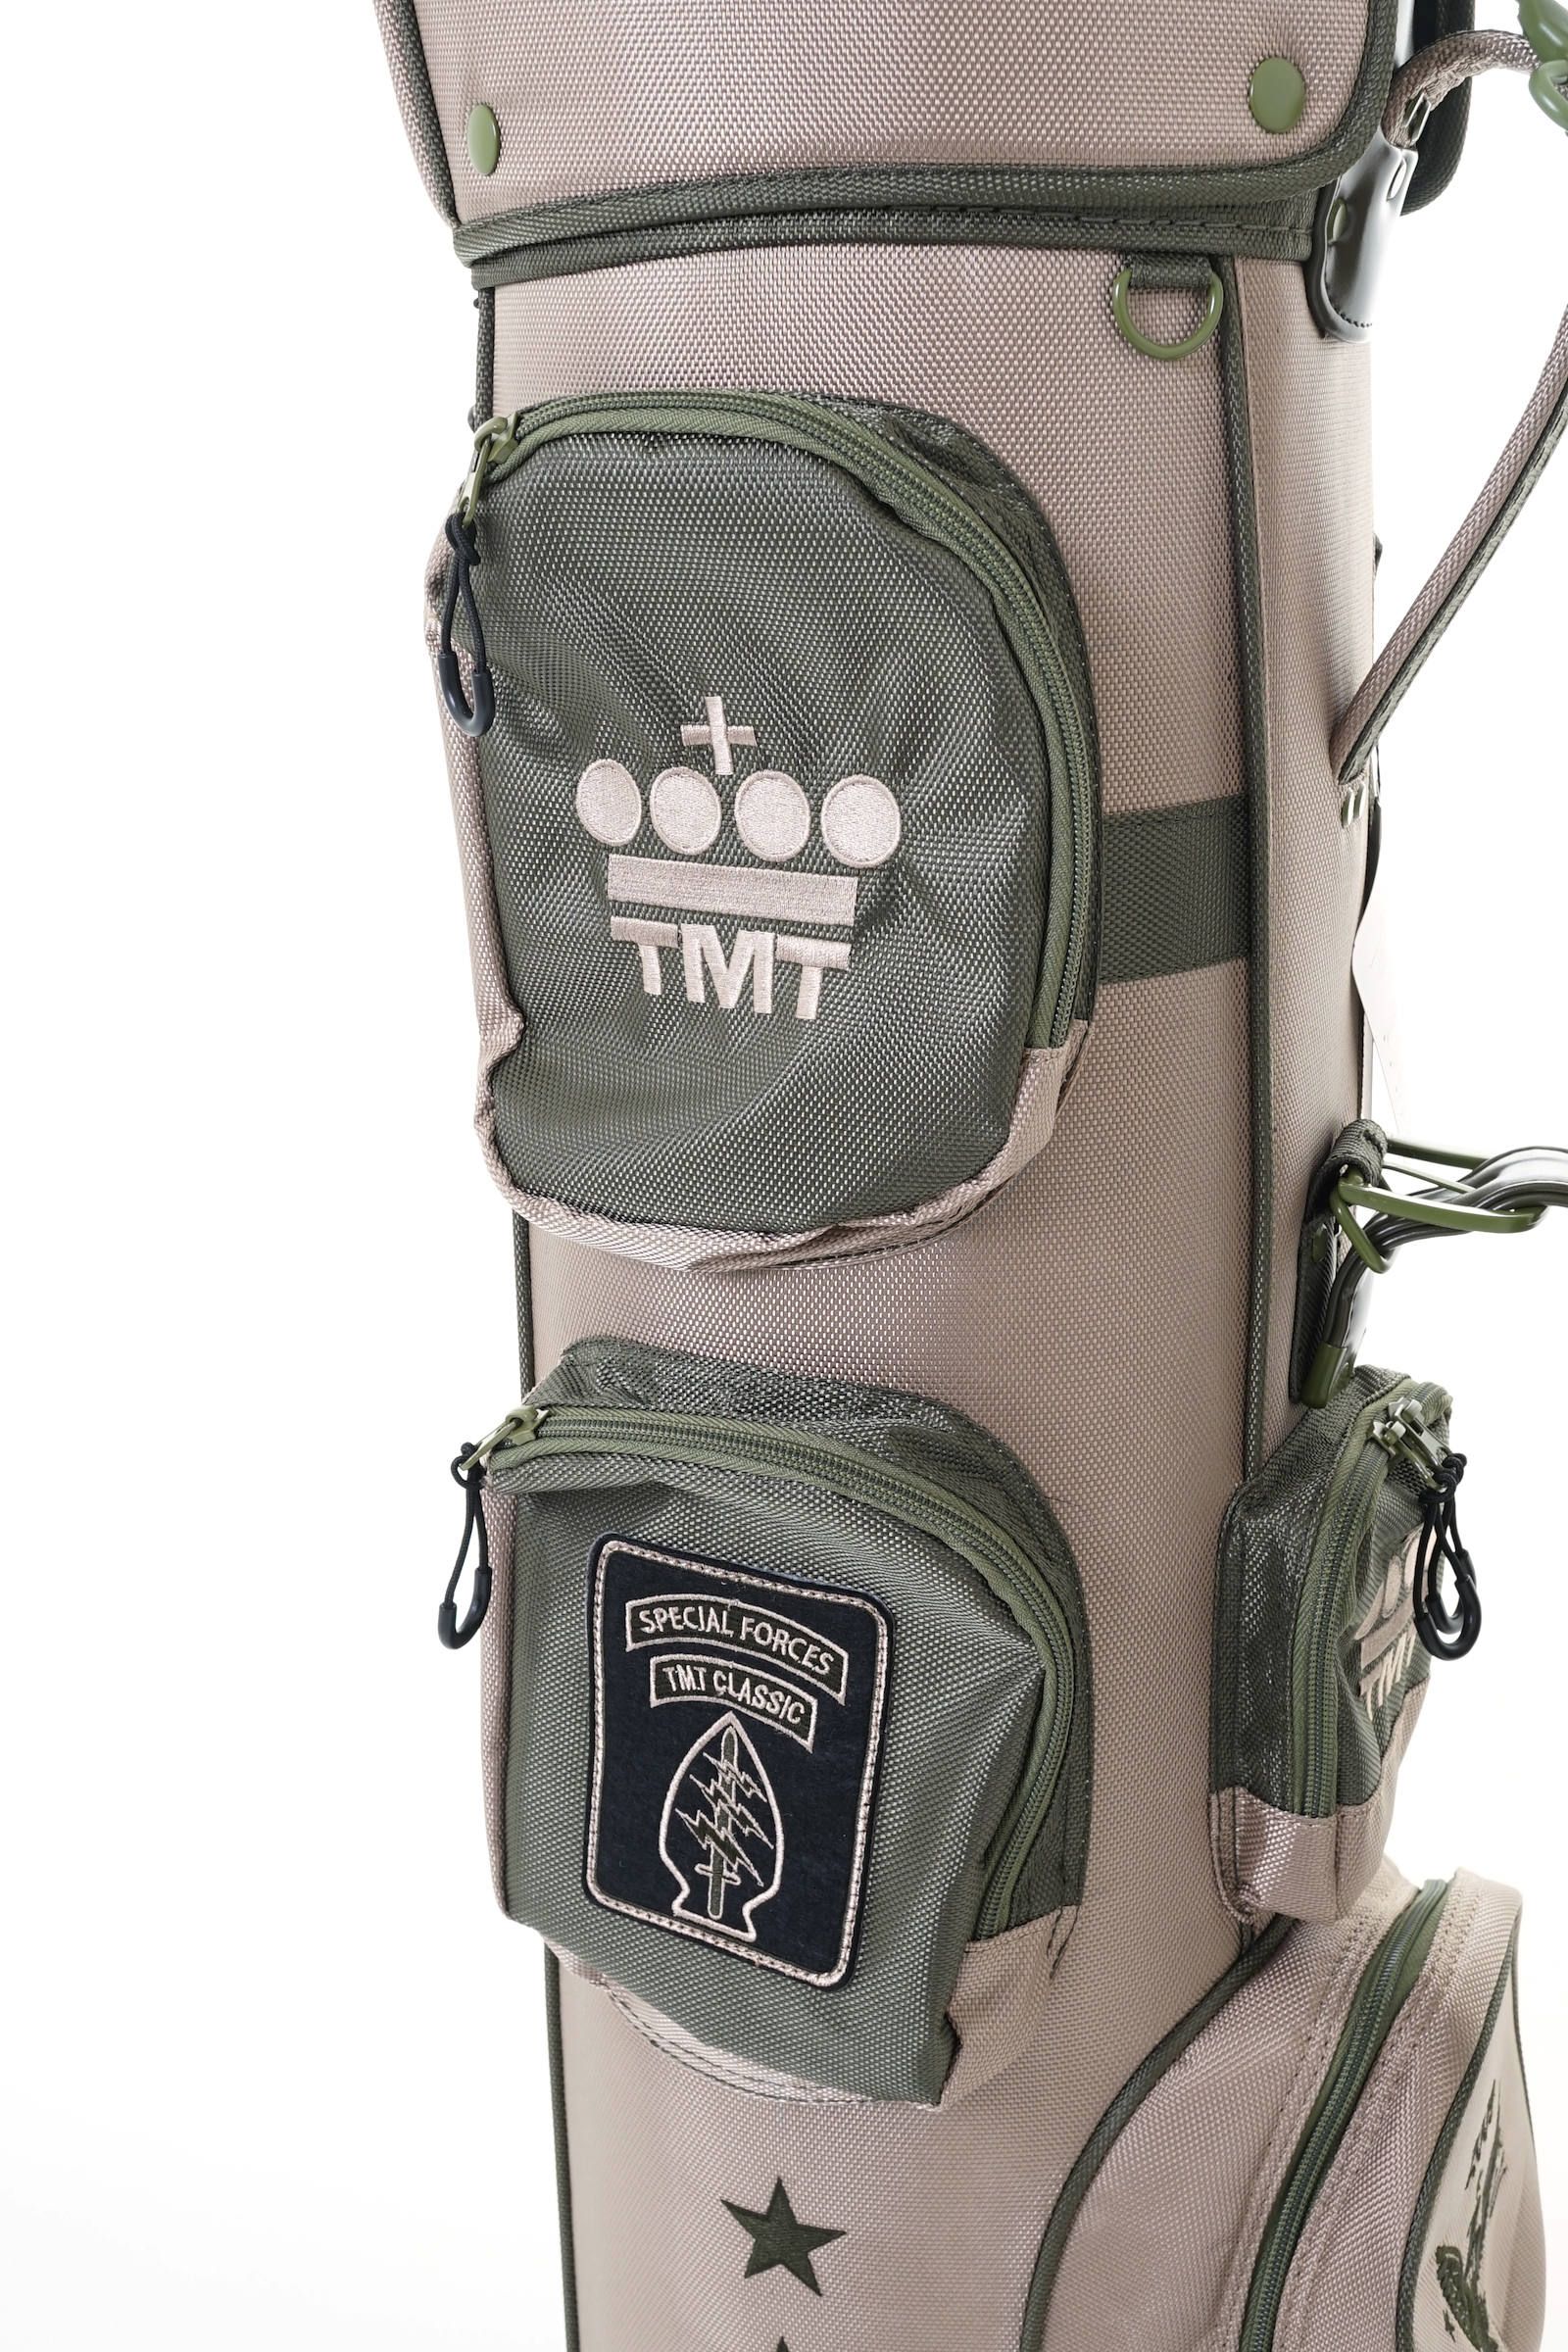 TMT CLASSIC - TMT CLASSIC BALLISTIC CADDIE BAG キャディーバッグ